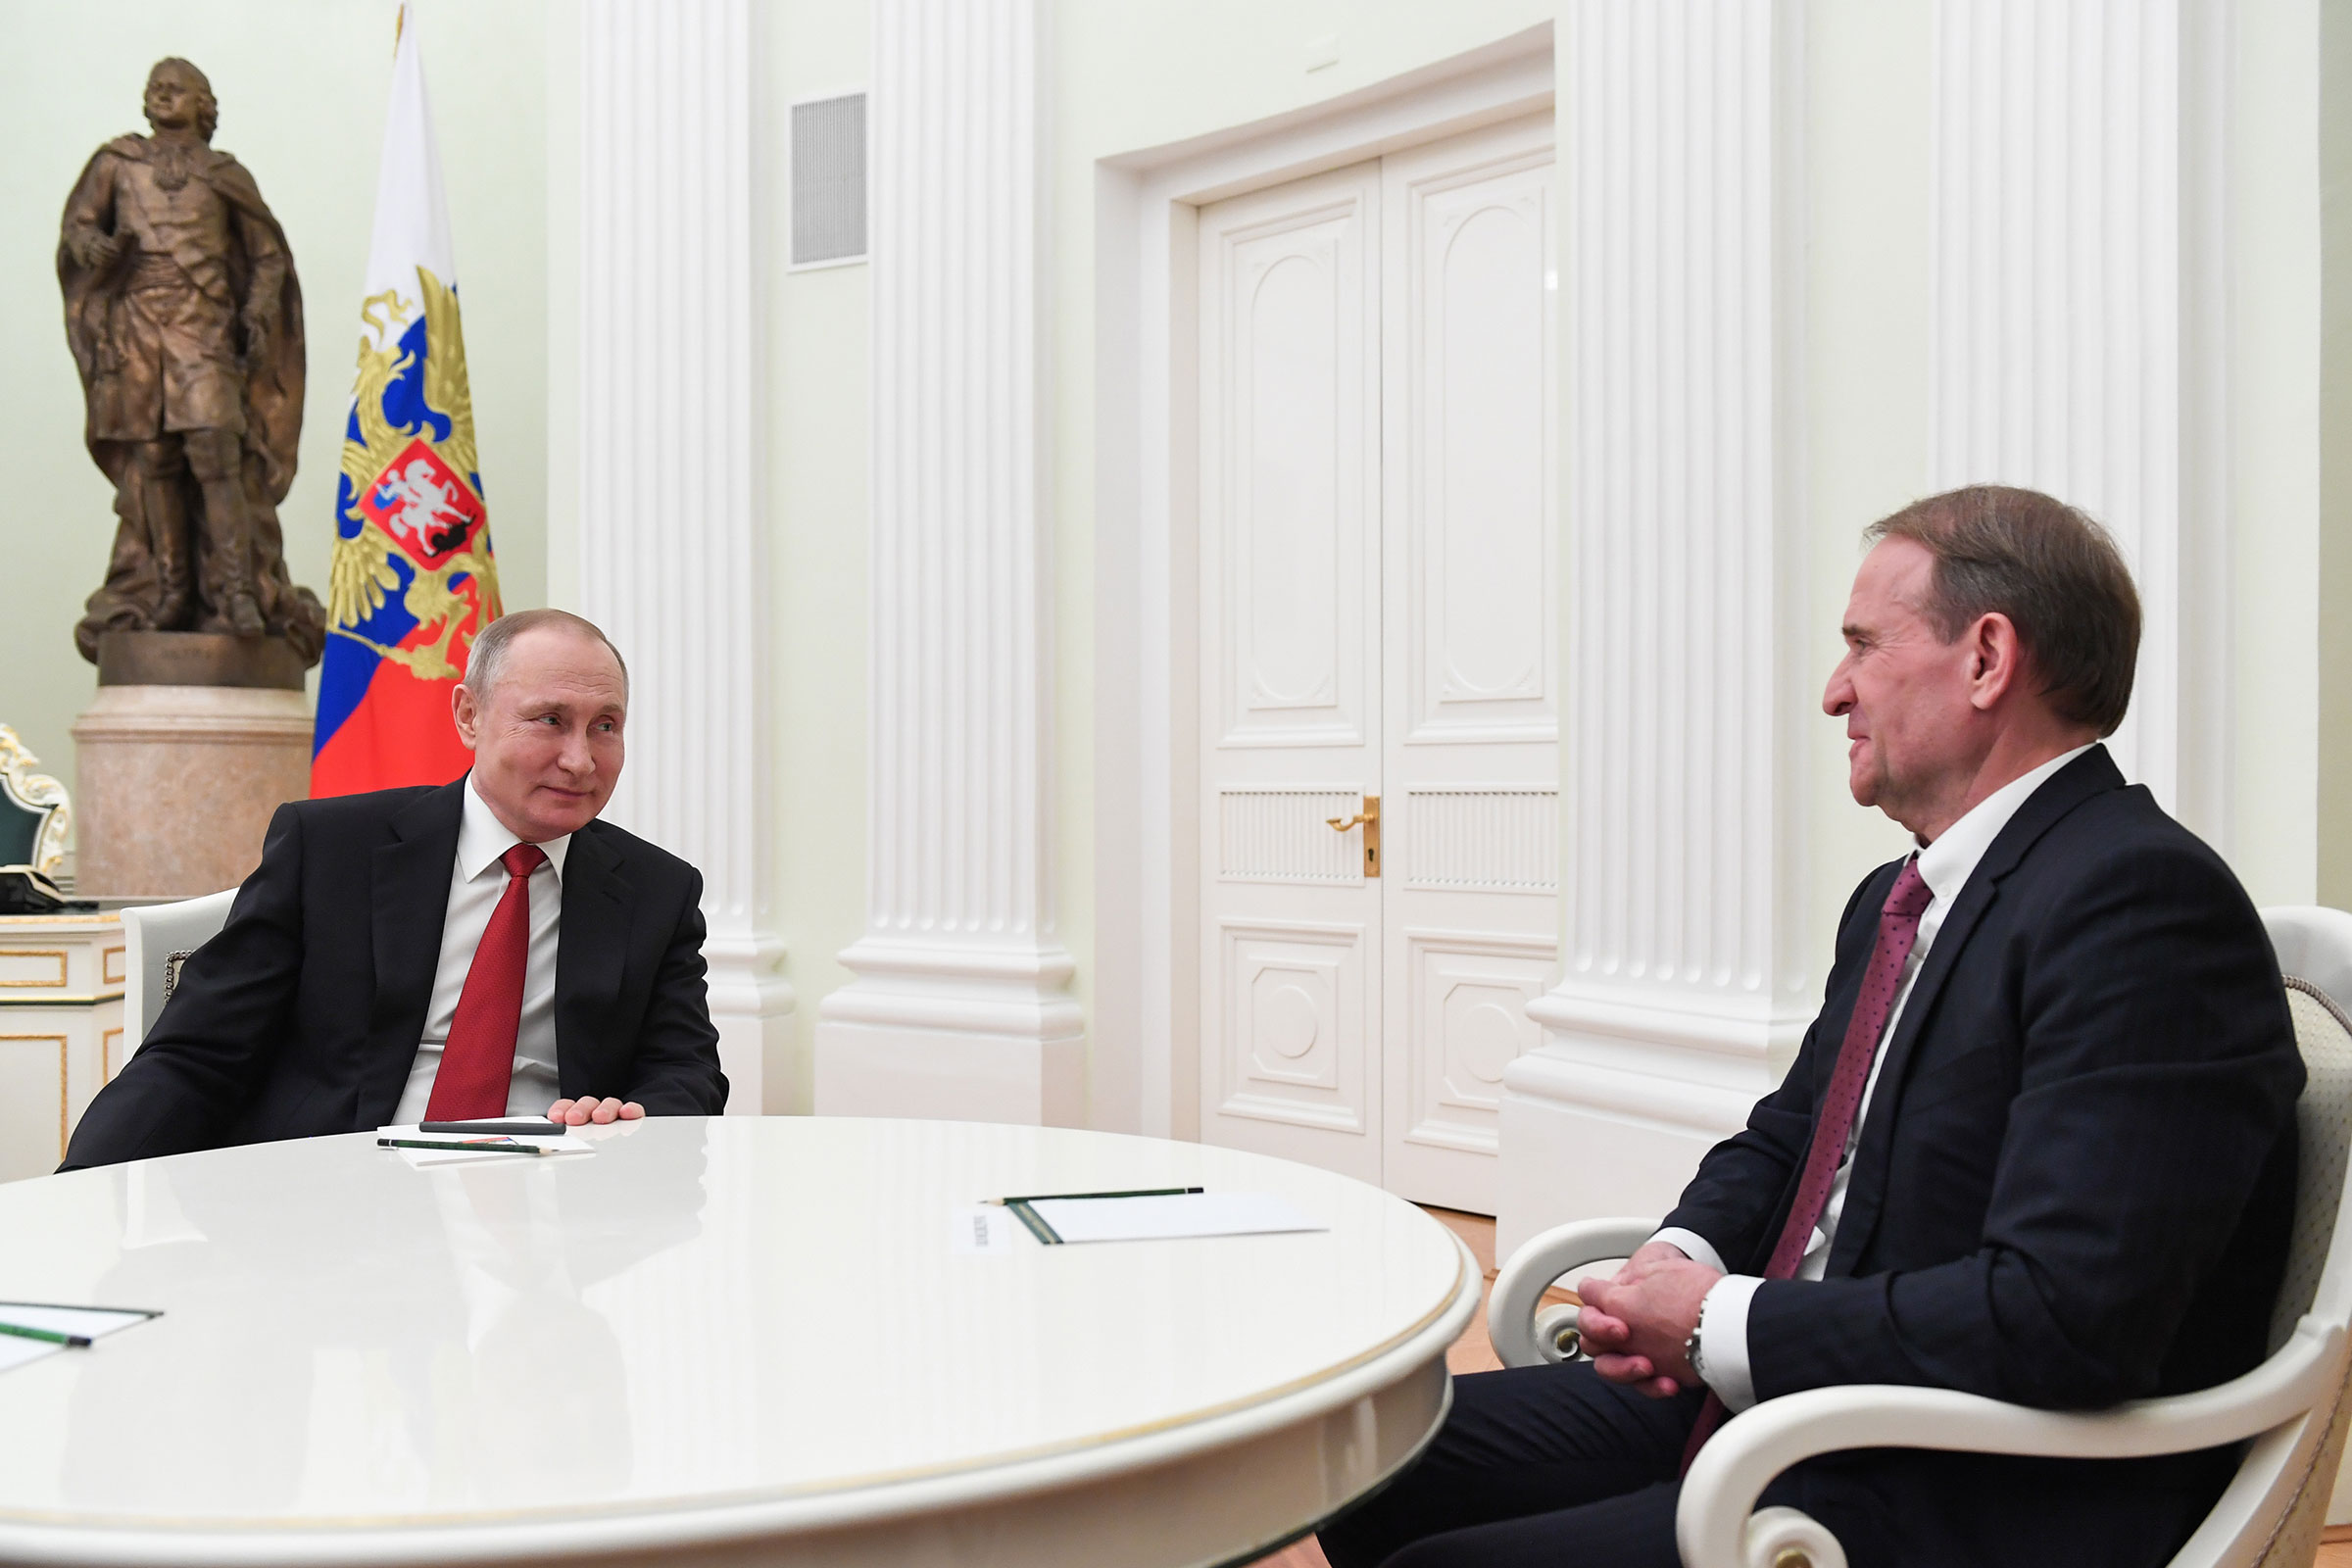 Russia: Russia's President Putin meets with Ukraine's Opposition Platform leader Medvedchuk